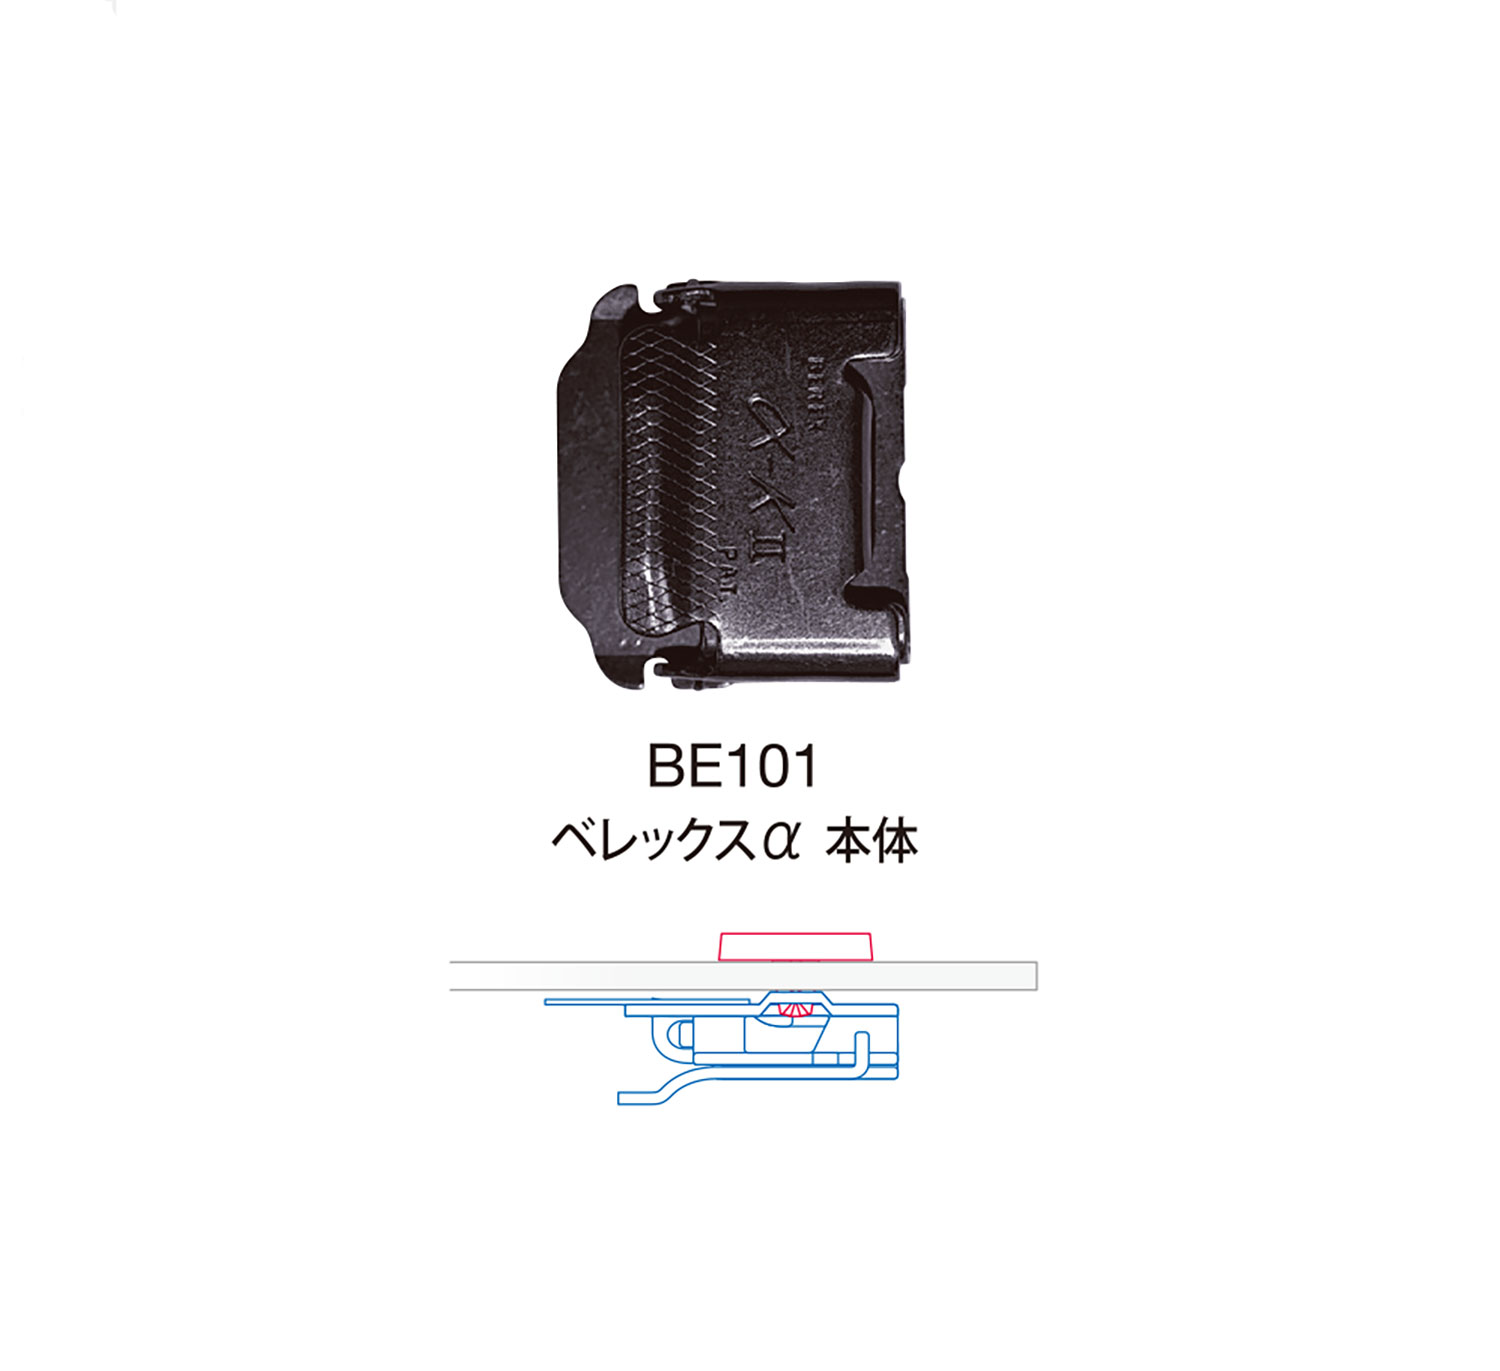 BE101 BEREX α-Körper[Schnallen Und Ring] Morito